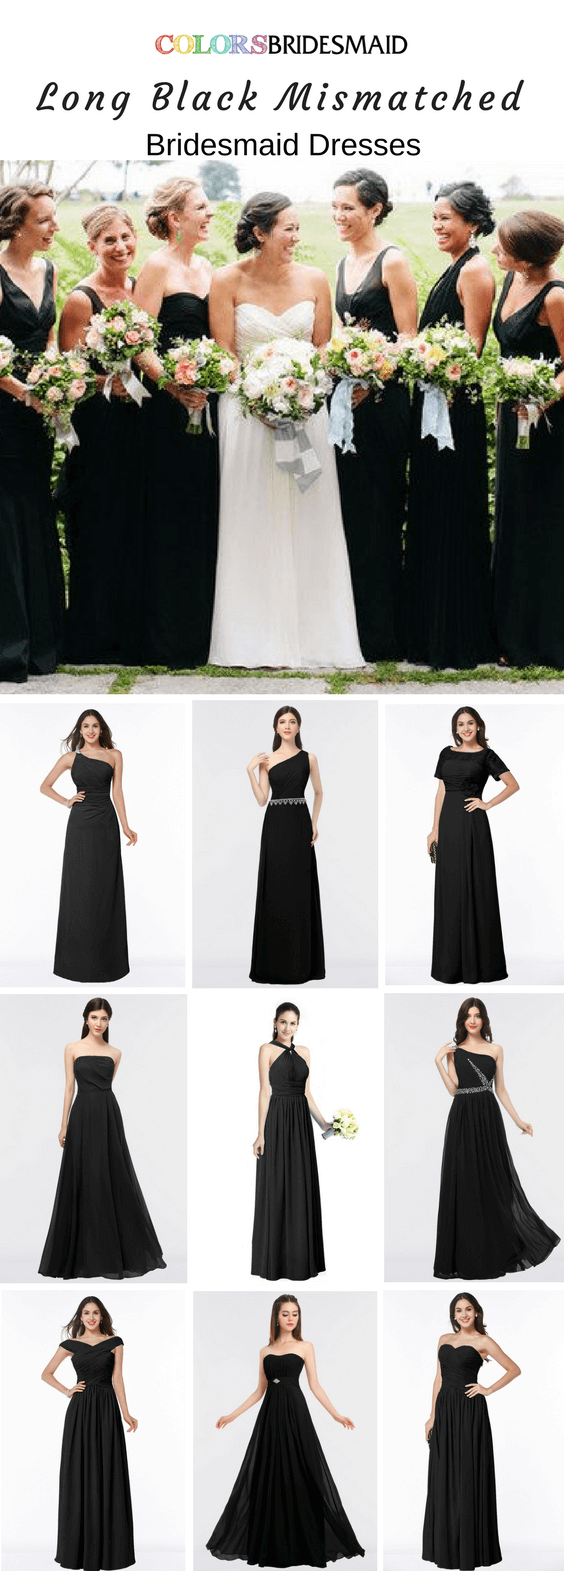 Best Long Black Bridesmaid Dresses ...